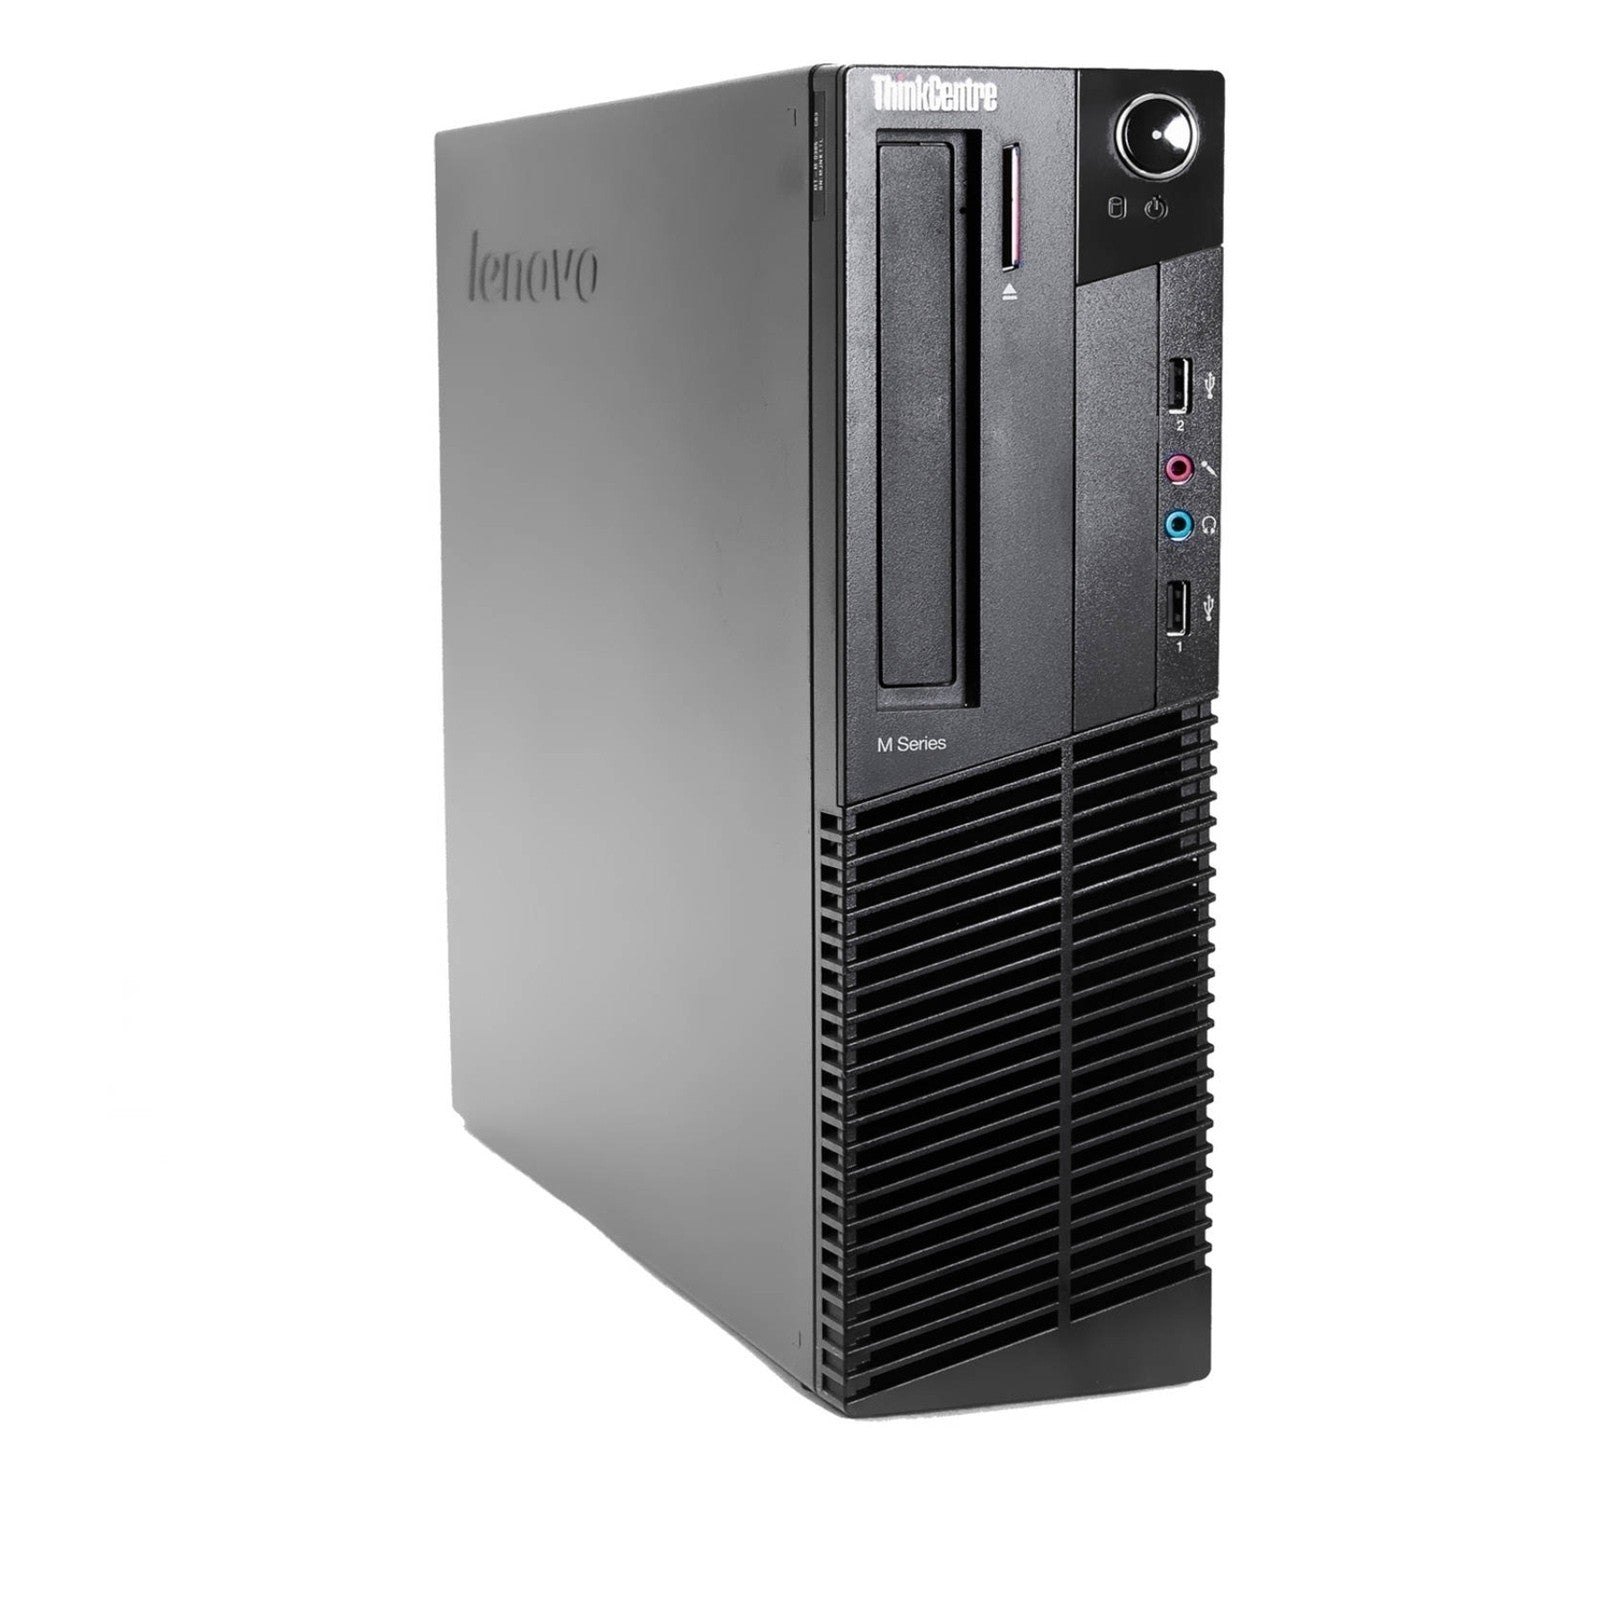 Lenovo ThinkCentre M92p Quad Core i5-3470 SFF 500GB 8GB RAM Windows 10 Desktop PC Computer